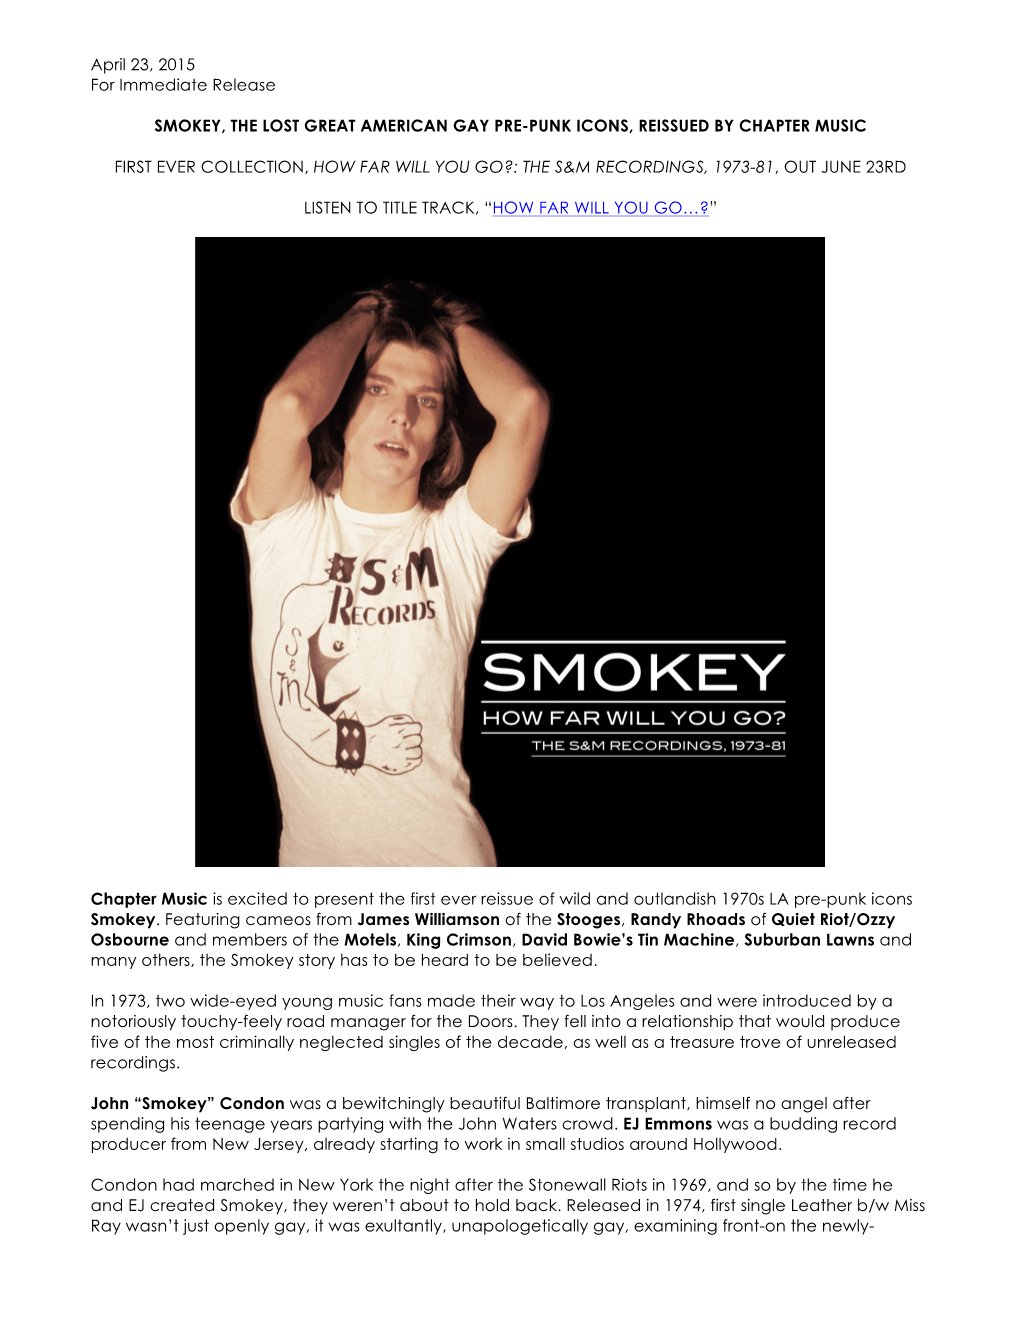 Smokey Announce